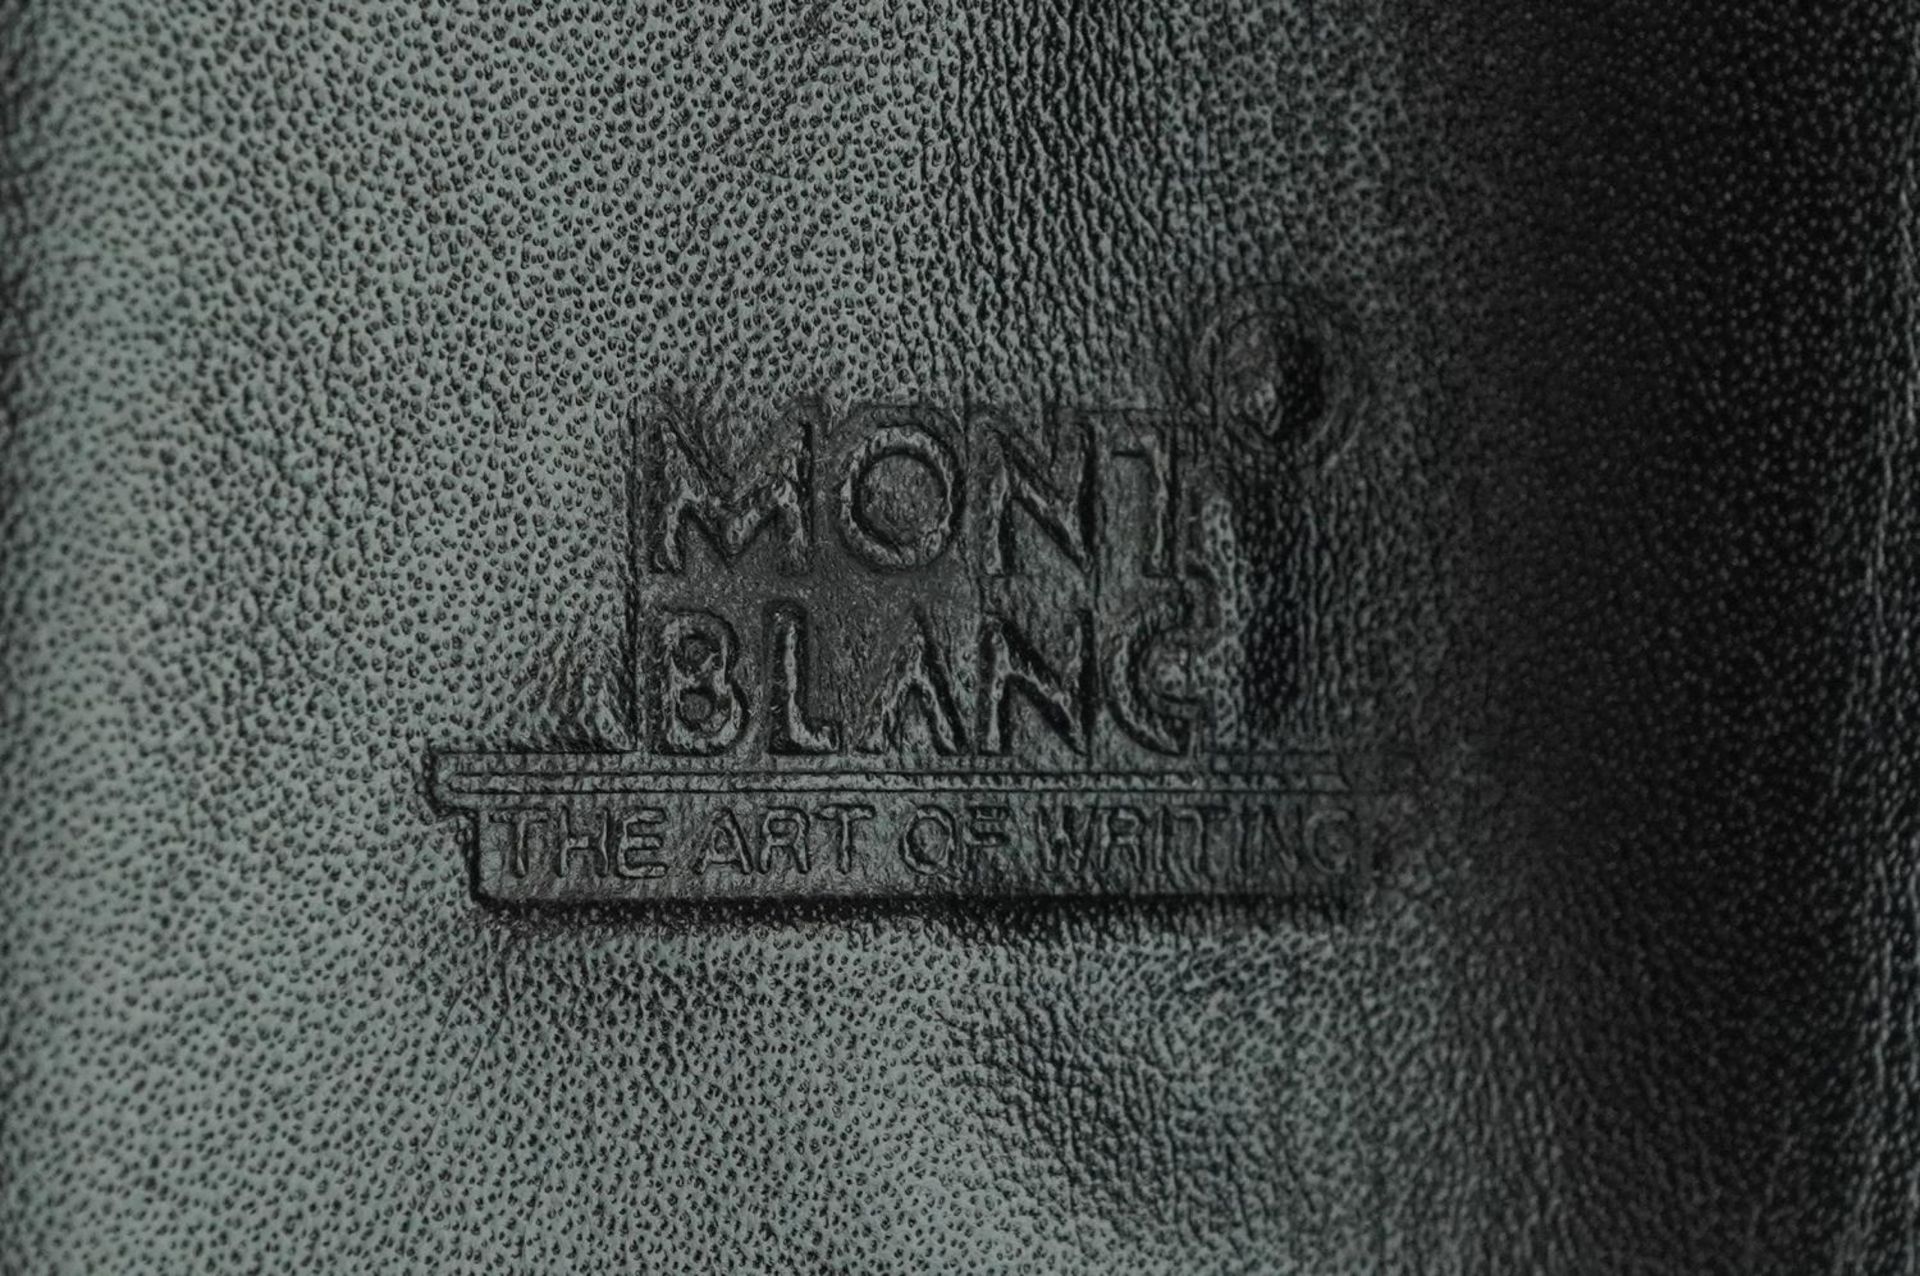 Montblanc Meisterstuck Traveller fountain pen with 14K gold nib, leather case and box - Bild 7 aus 7